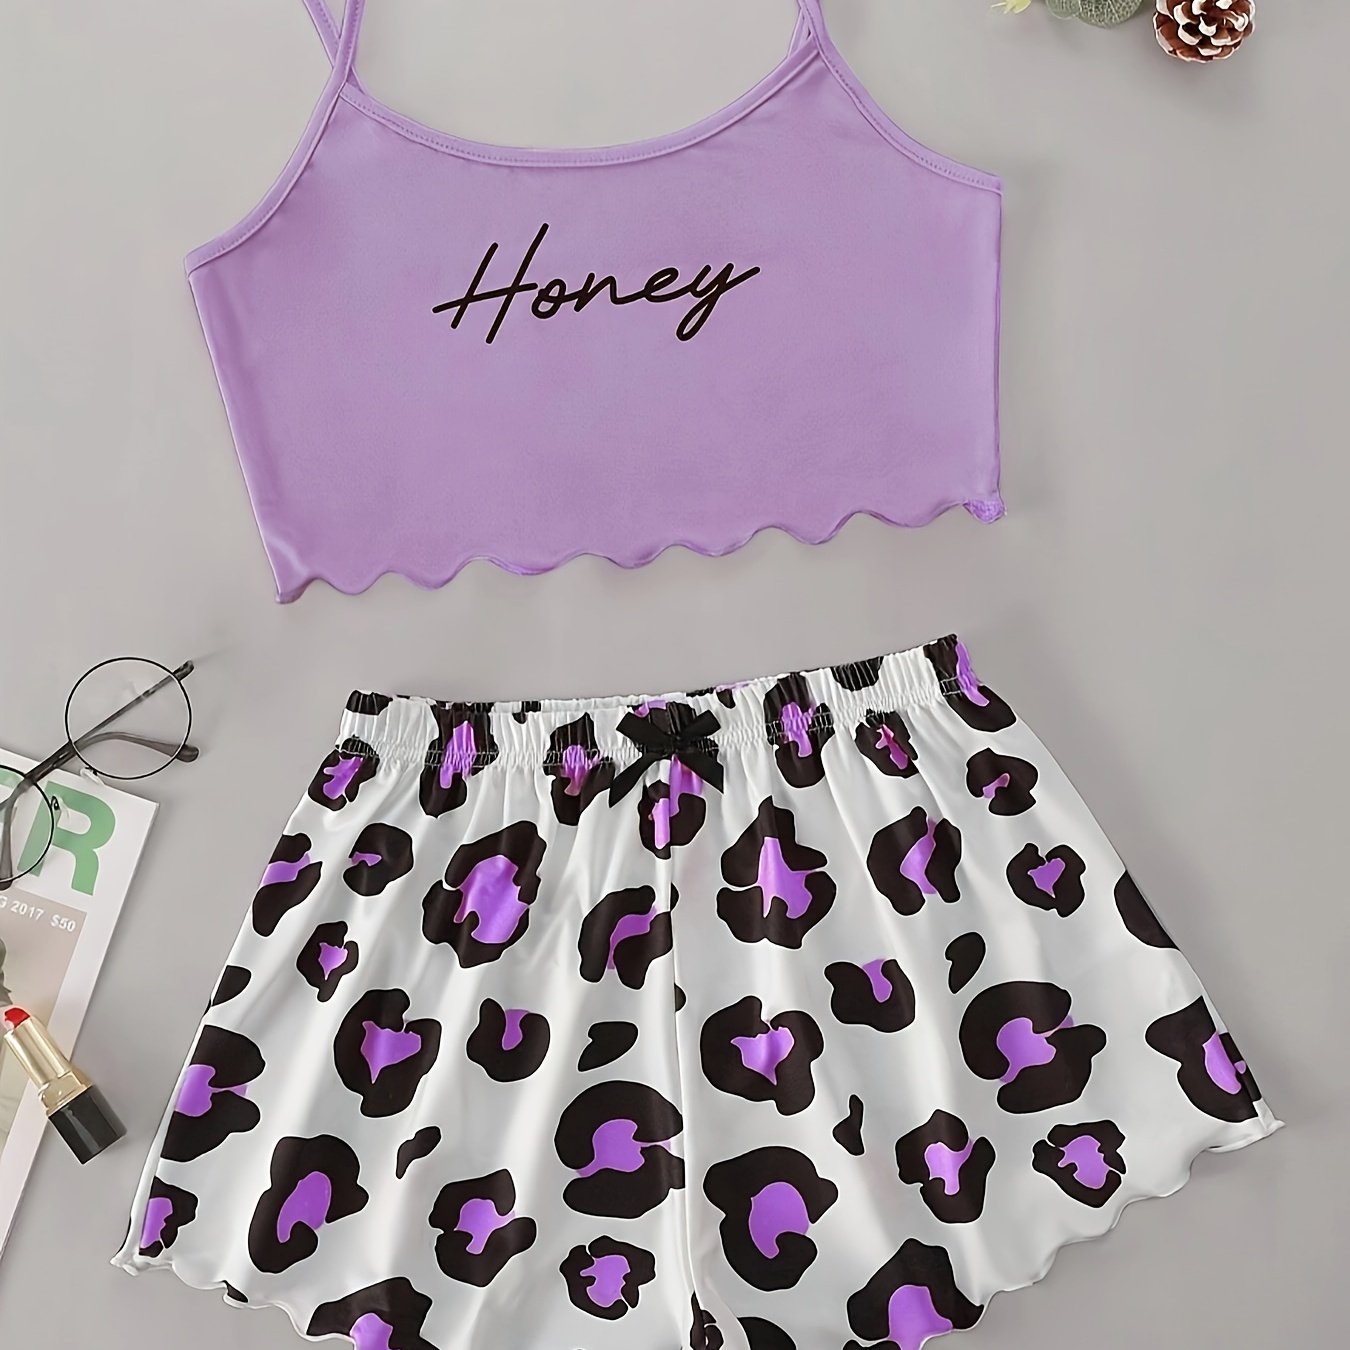 

Women's Cute Printed Cami Pajama Set, "honey" Graphic, Crop Cami Top With Leopard Print Shorts, Sleepwear Set